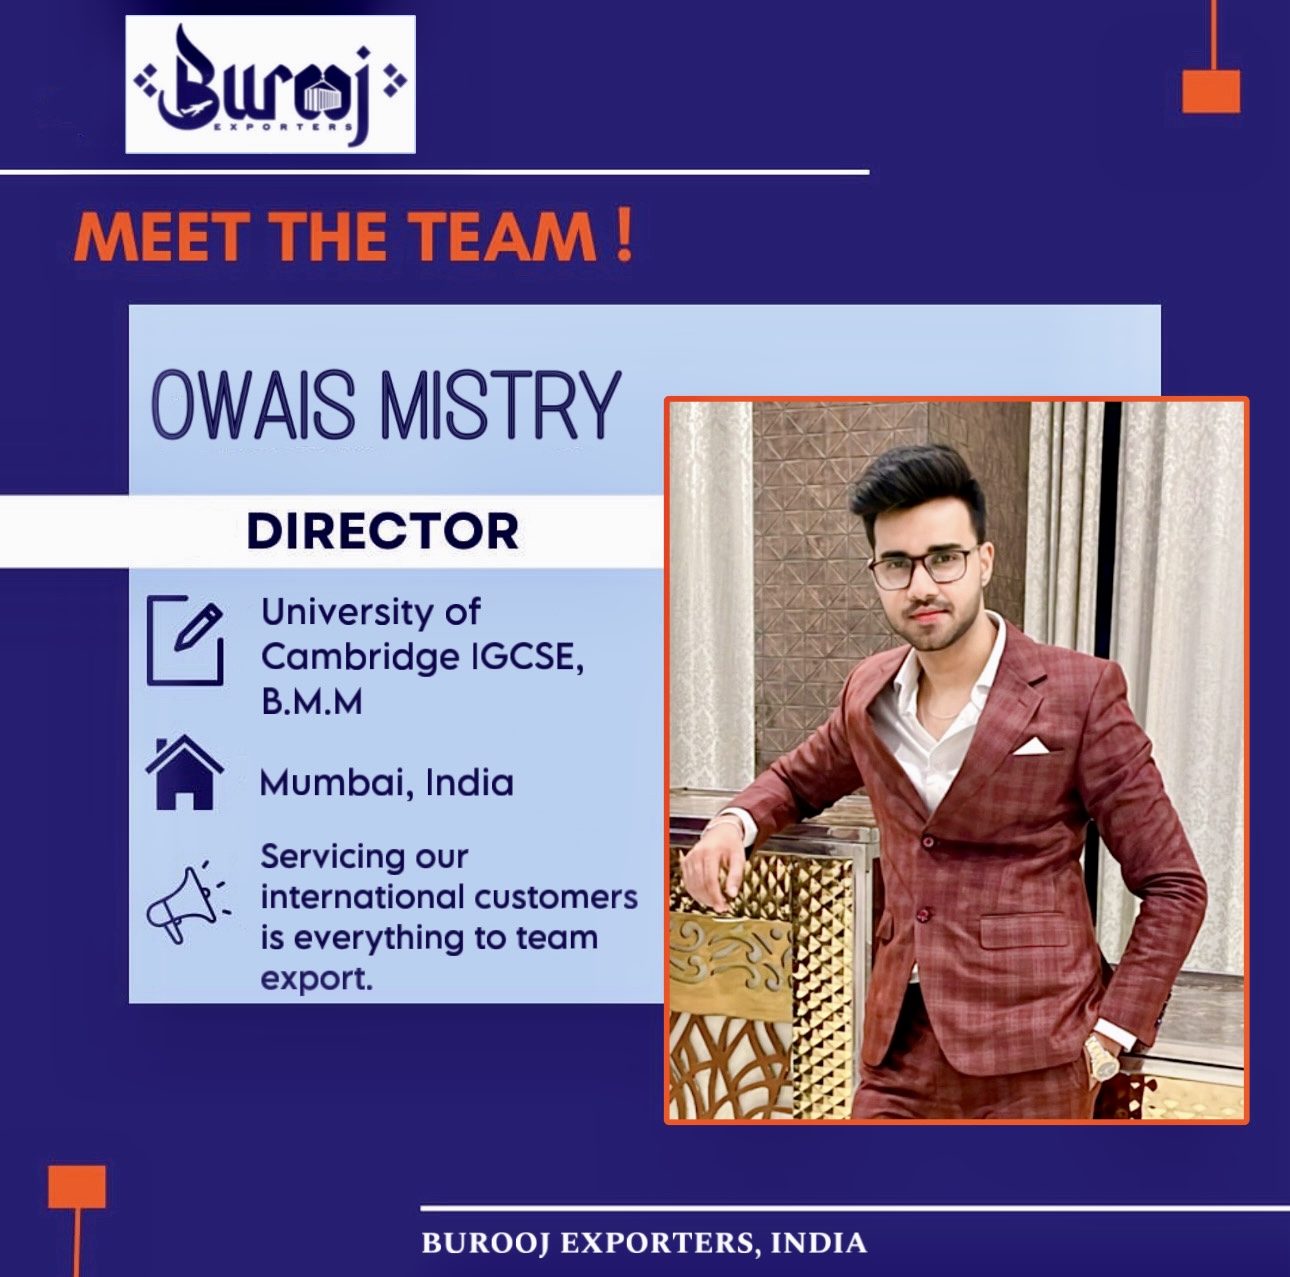 MEET THE TEAM!

OWAIS MISTRY

DIRECTOR

University of
Cambridge IGCSE,
B.M.M

|)
) Mumbai, India

. Servicing our
x: international customers 3

is everything to team
export.

 

BUROOJ EXPORTERS, INDIA